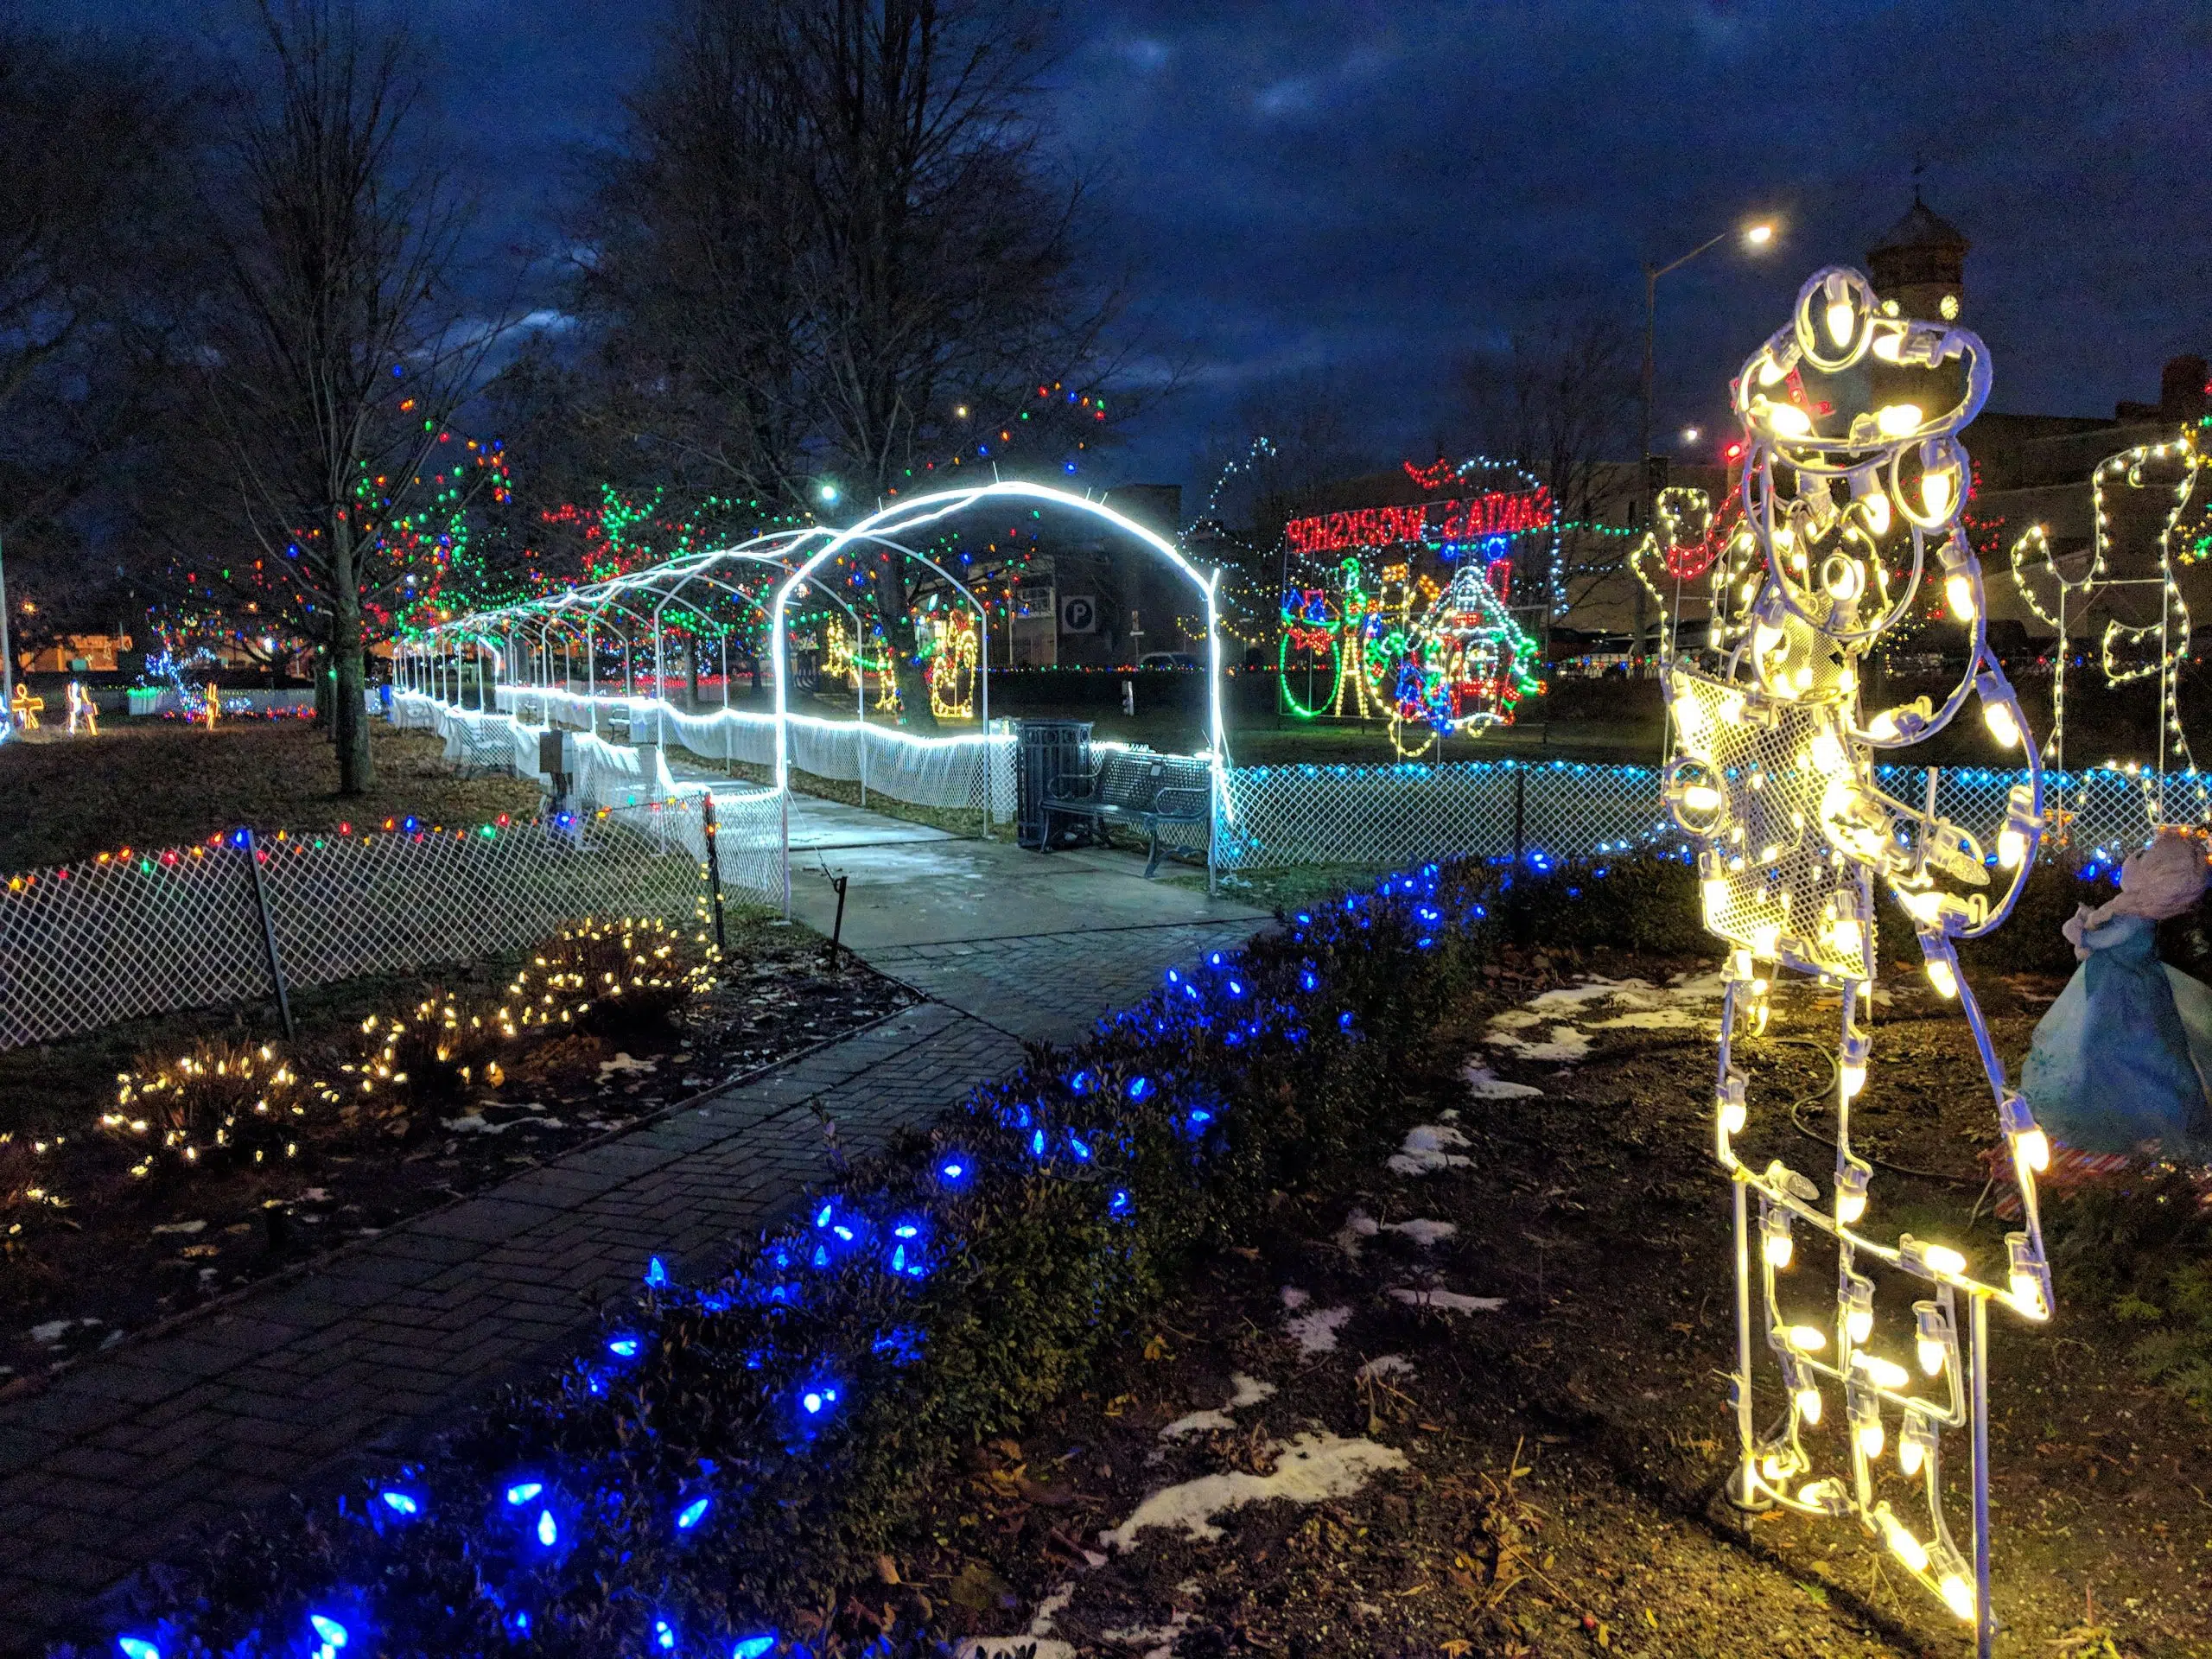 QW Christmas display at Fraser Park vandalized